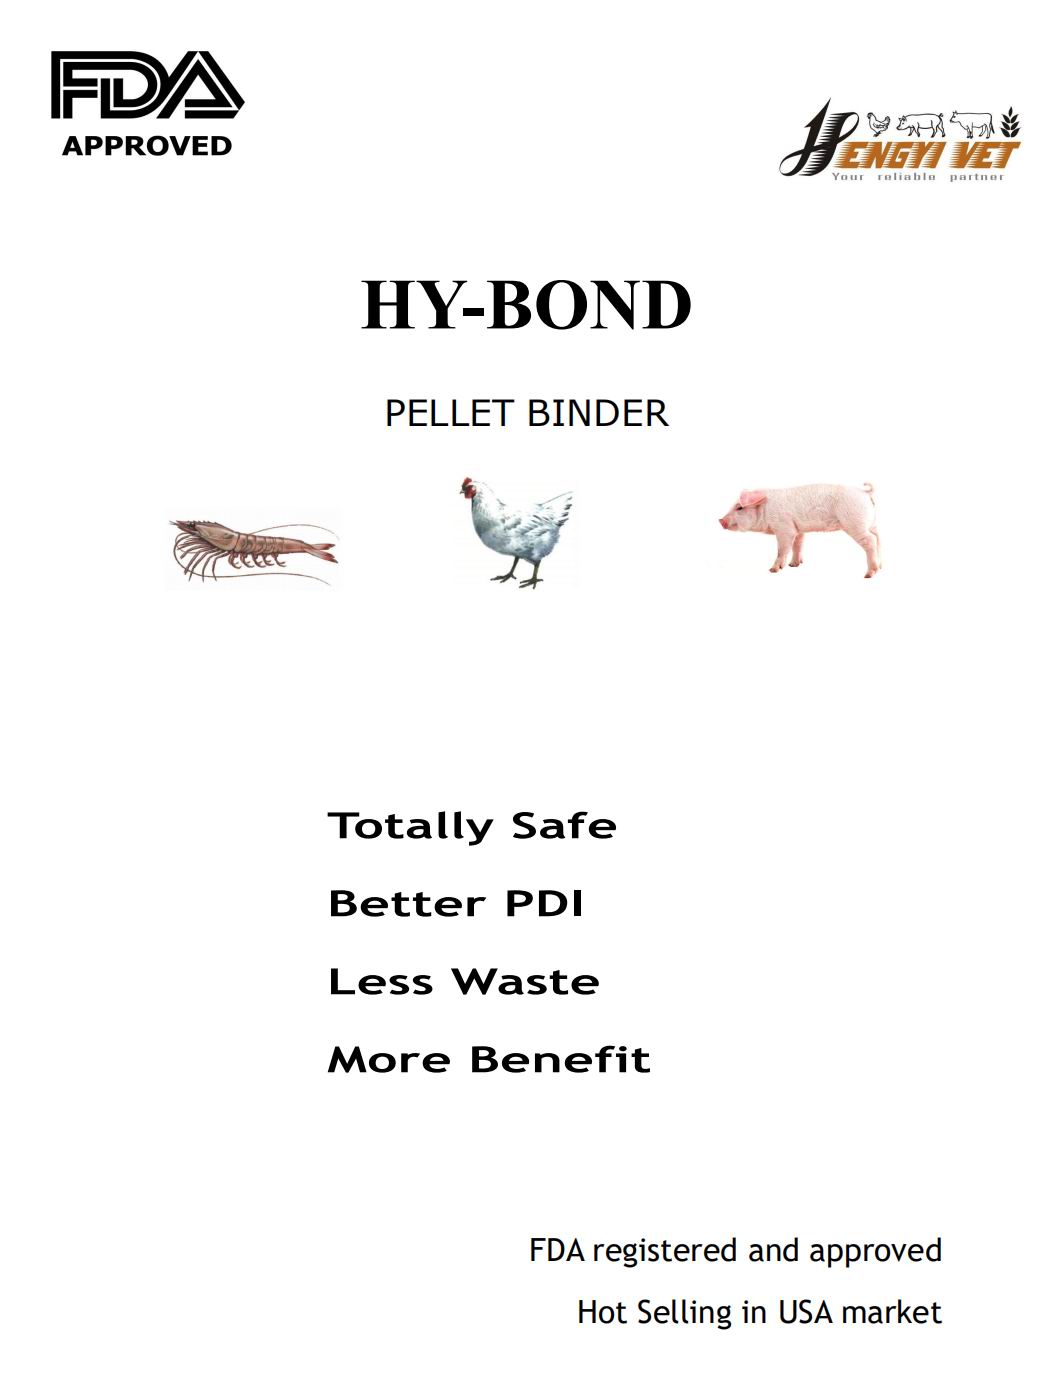 HY-BOND FDA.jpg